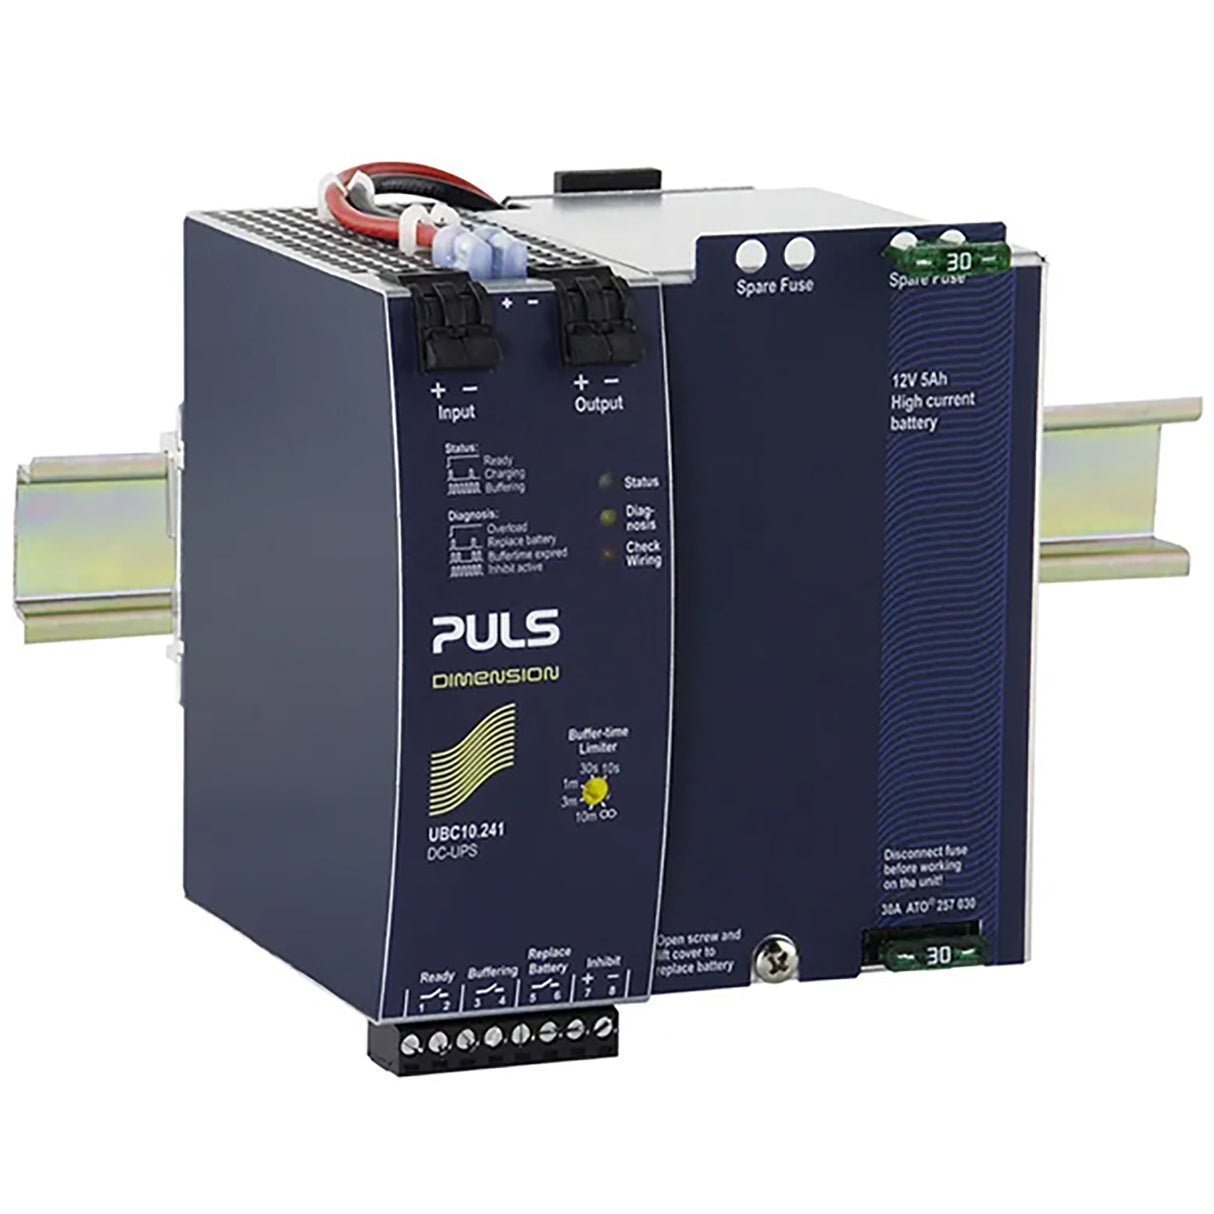 Pulse battery controller